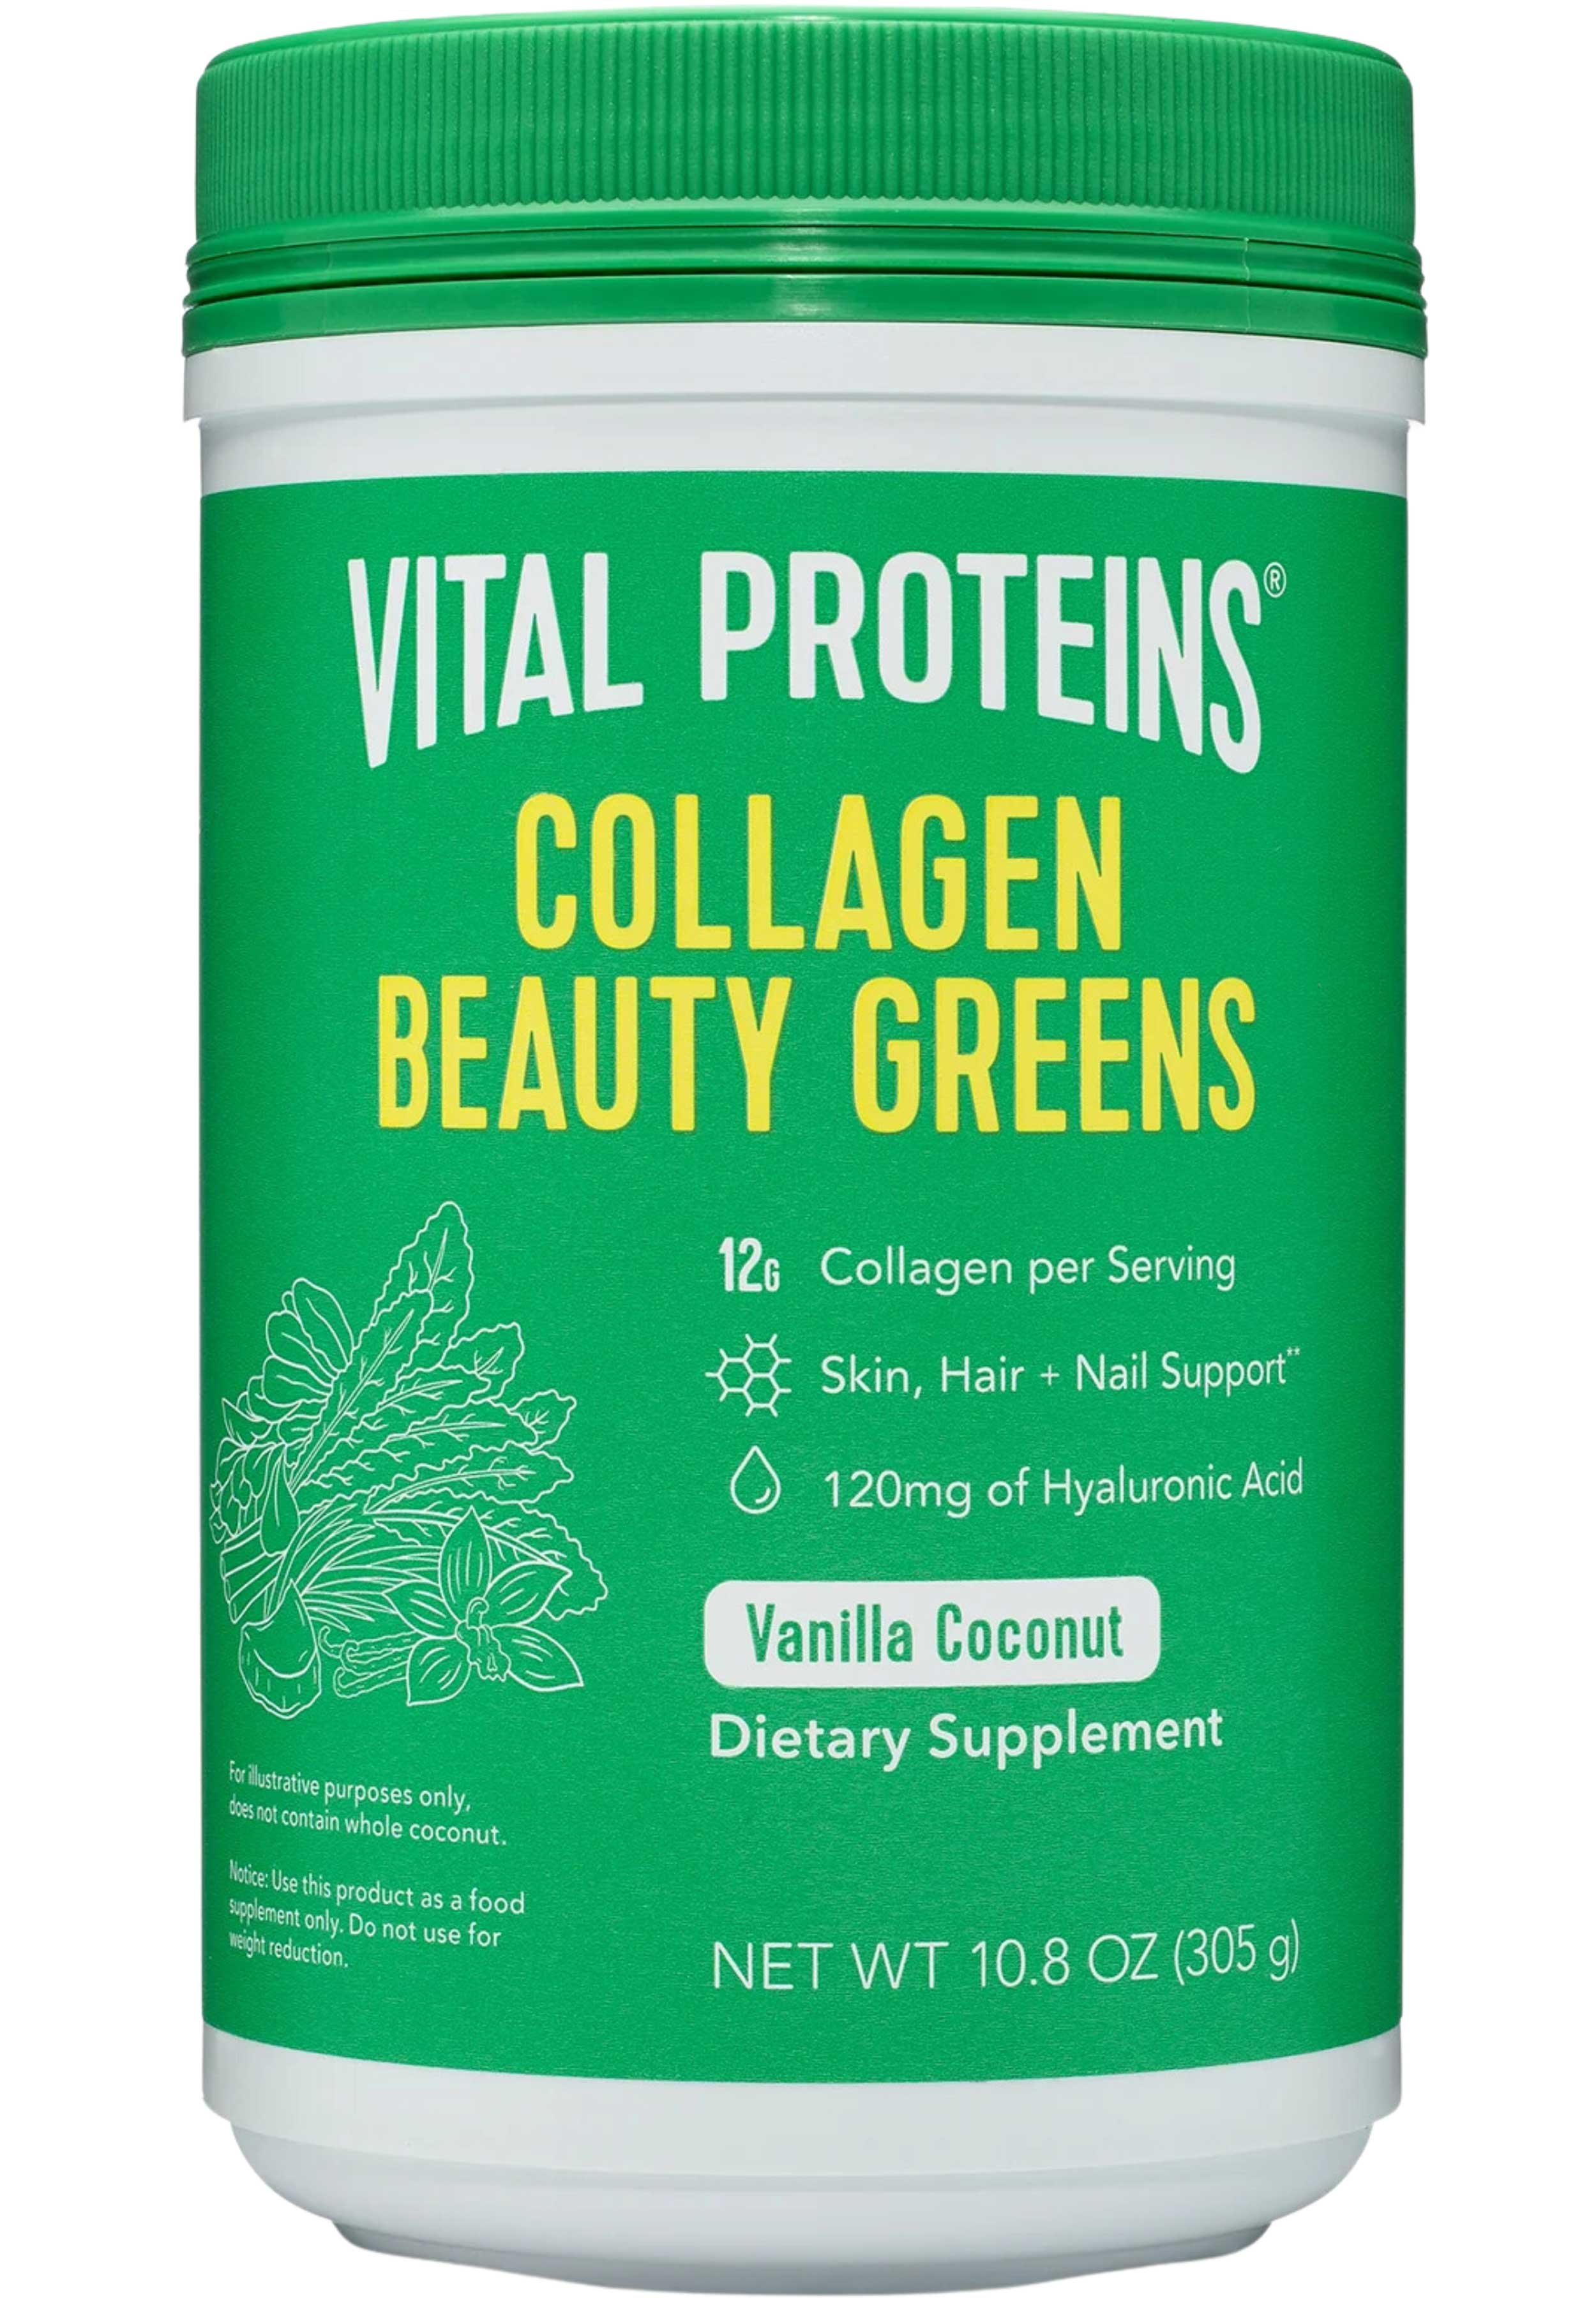 Vital Proteins Collagen Beauty Greens Powder